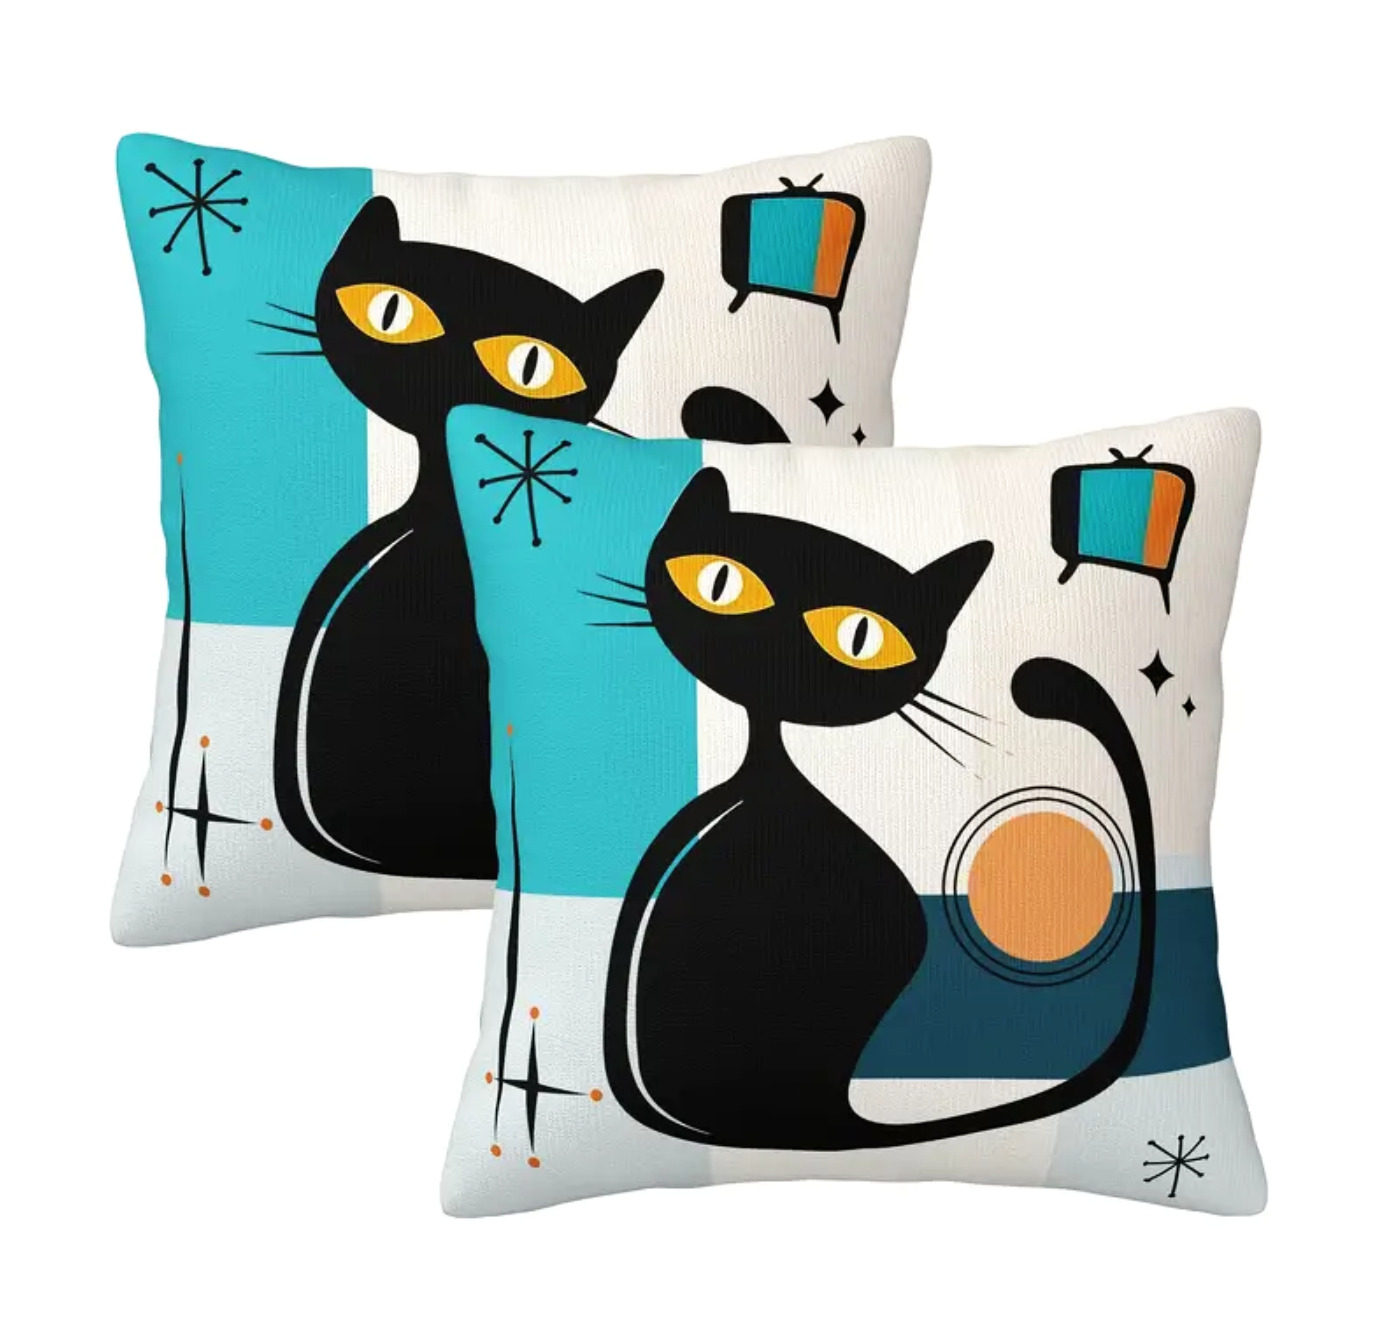 2pcs Mid-Century BLACK CAT Cartoon Decorative Pillows Covers -Ships from Tulsa